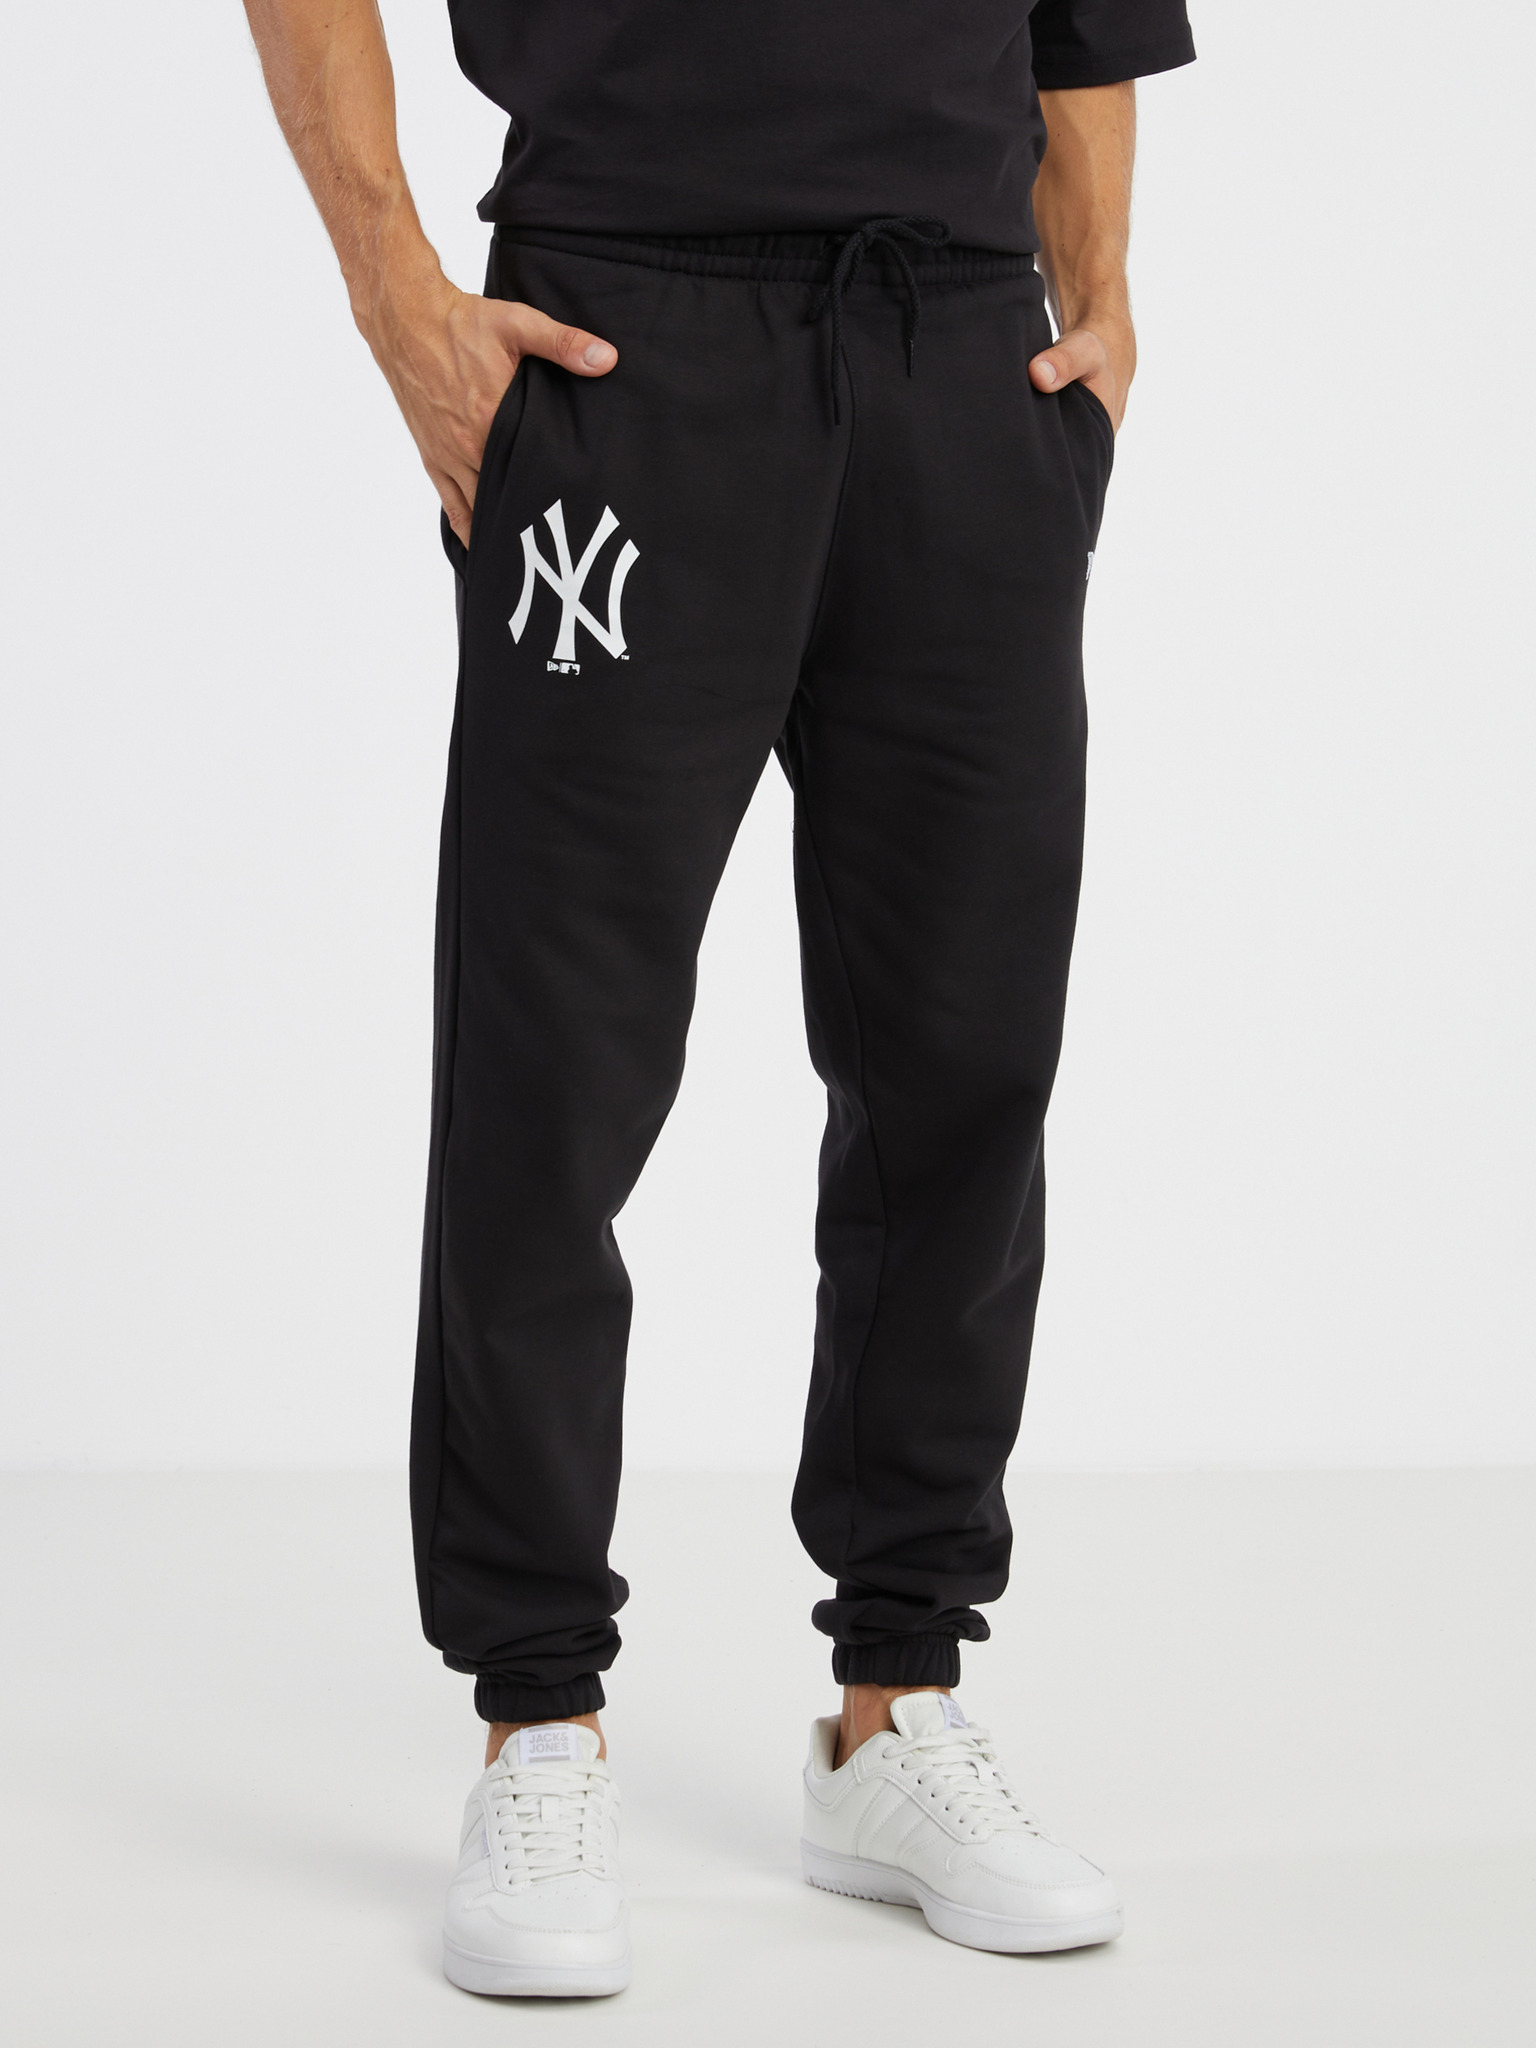 New era MLB New York Yankees Pants Black